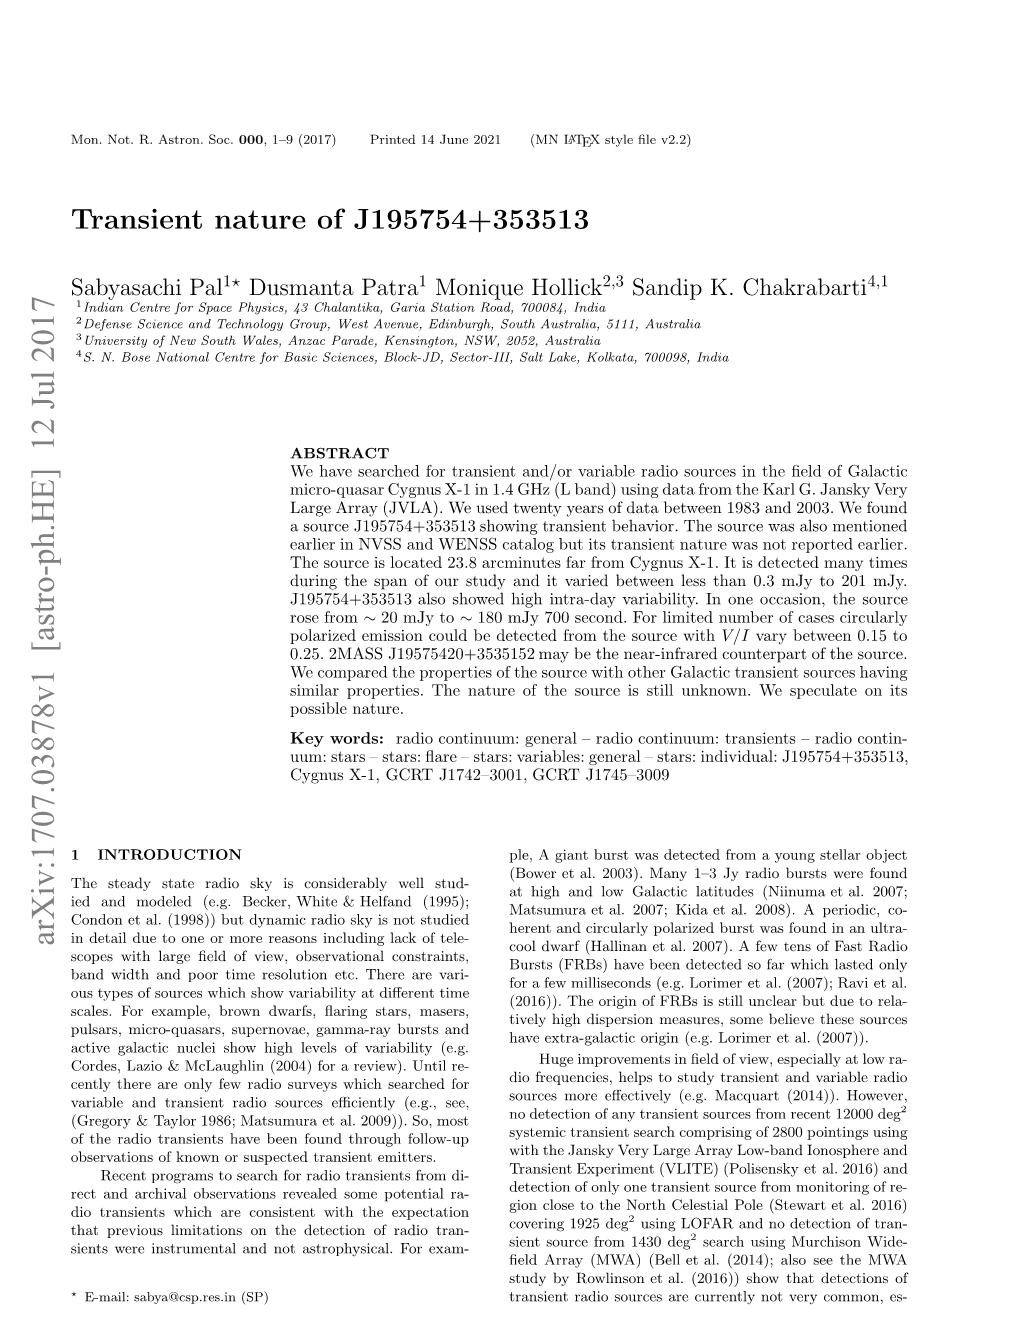 Transient Nature of J195754+353513 3